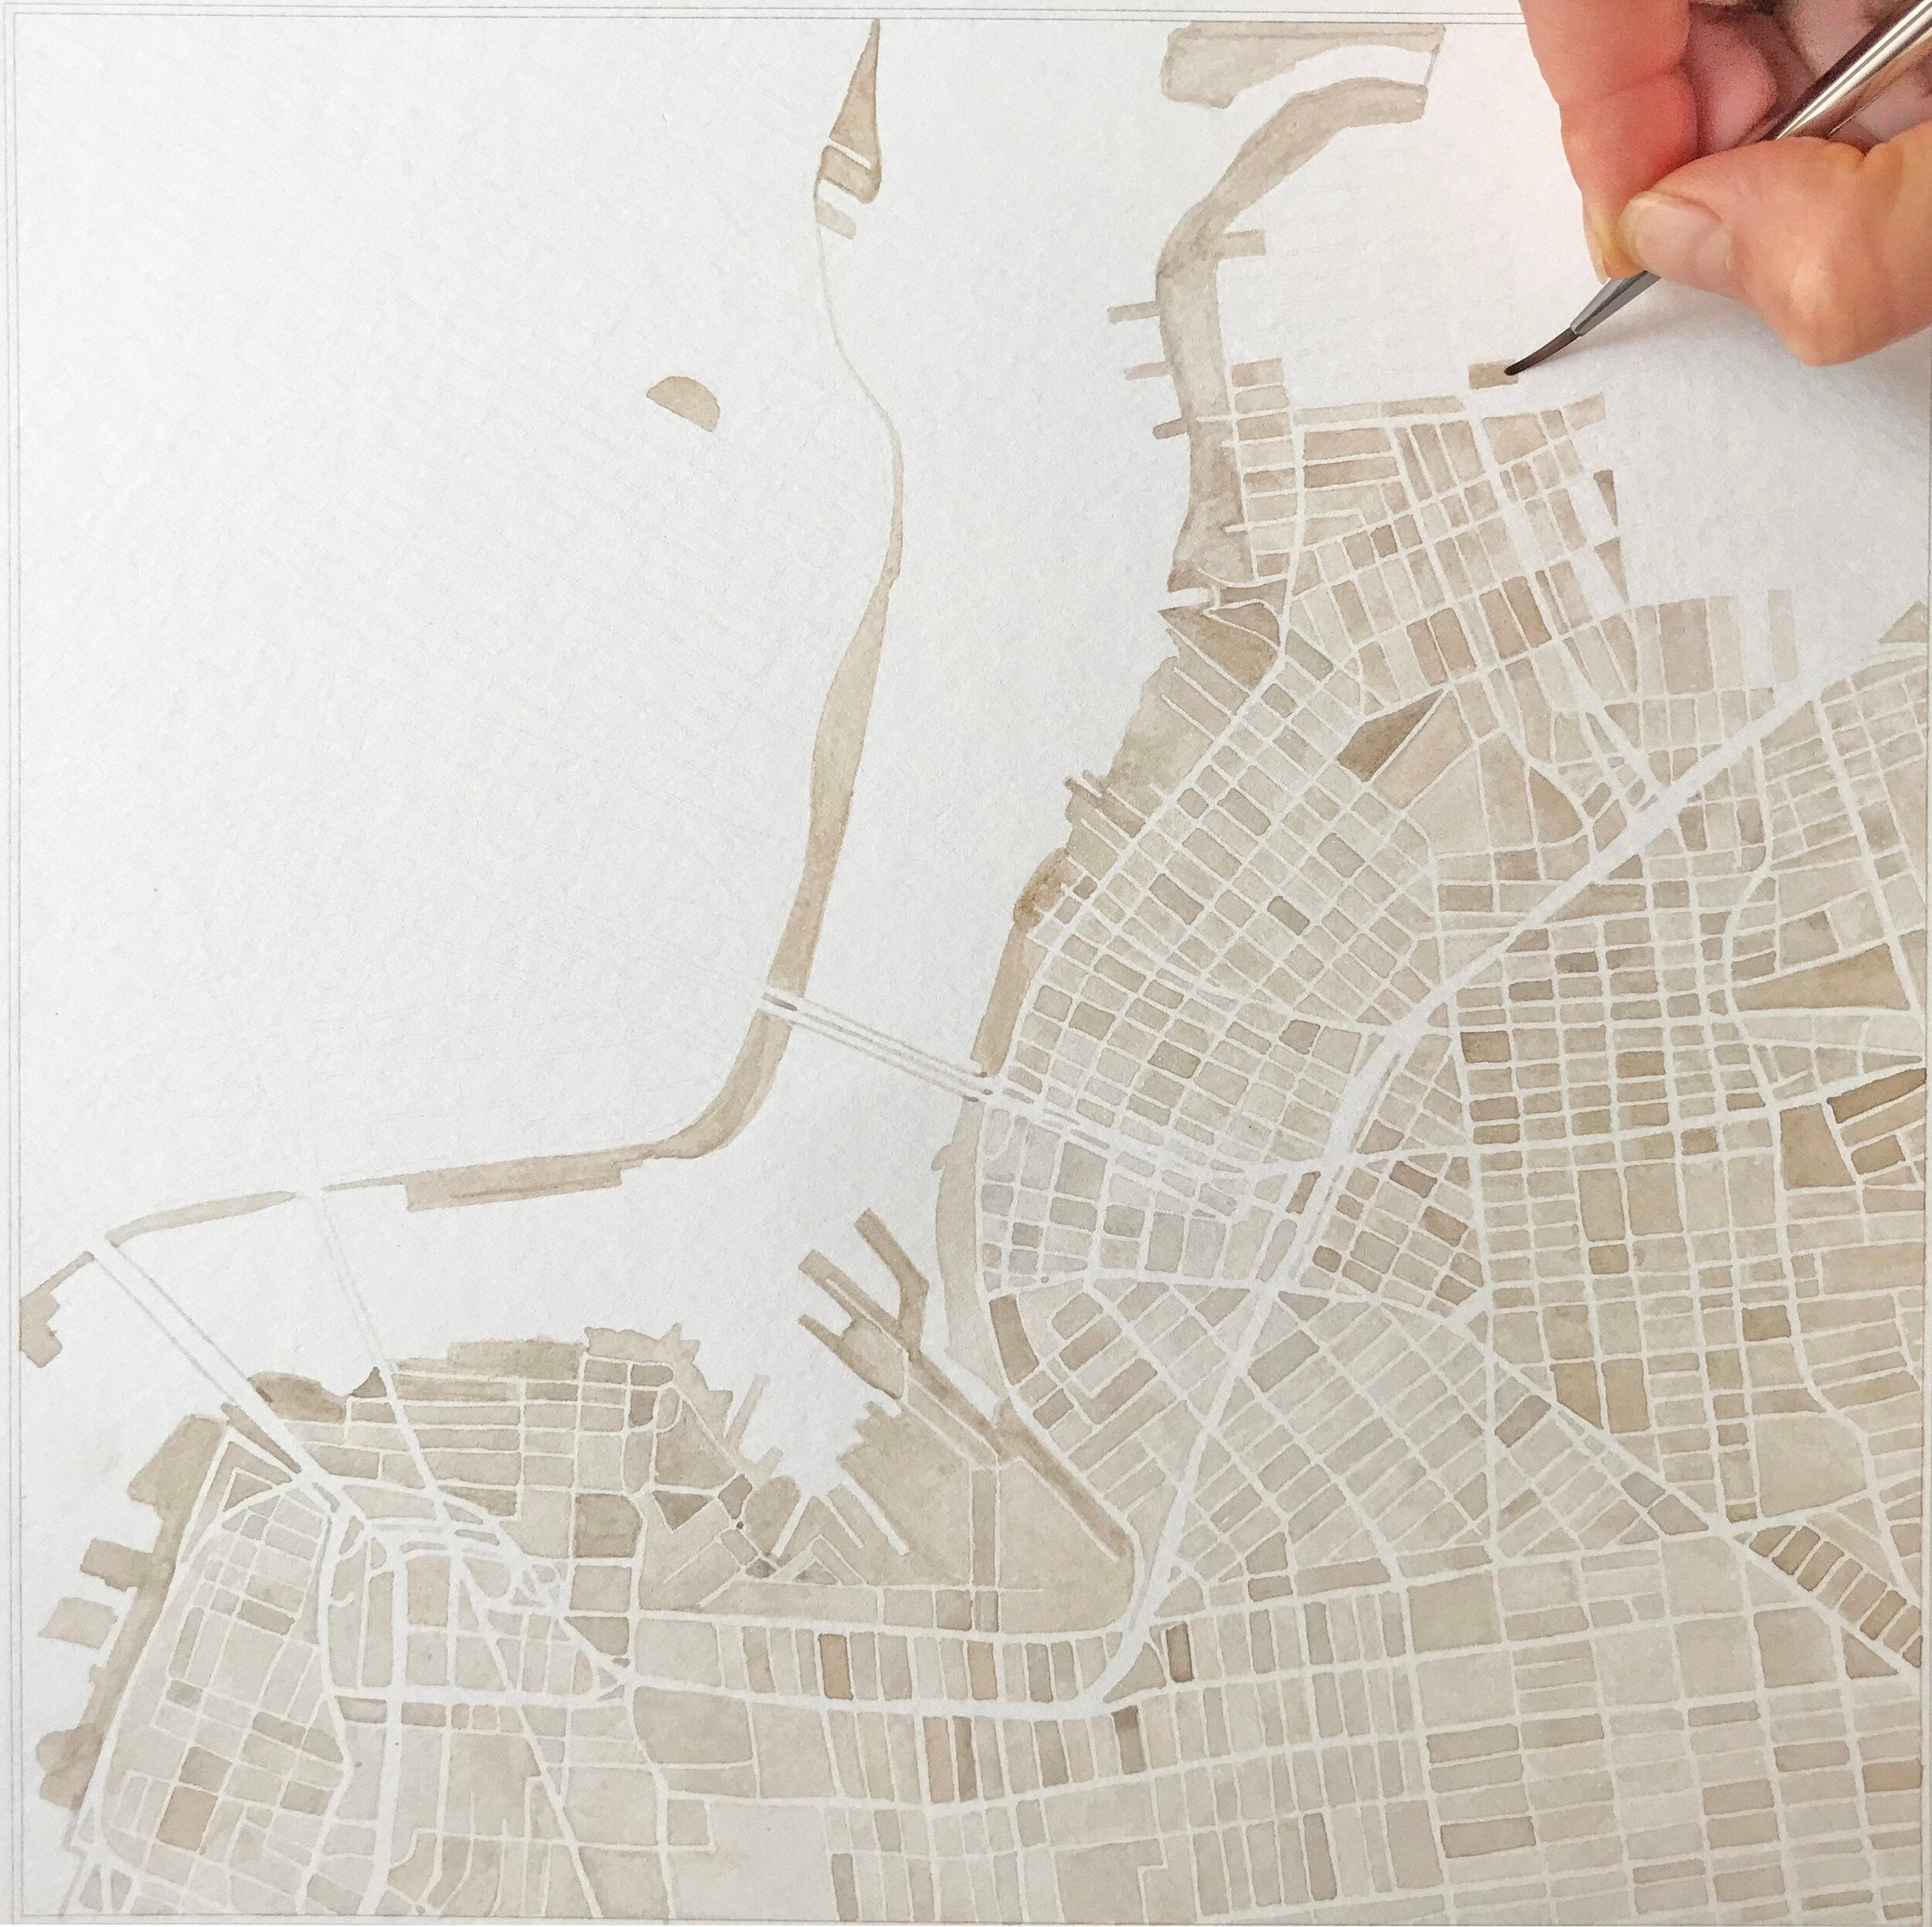 WILLIAMSBURG Greenpoint BROOKLYN Watercolor City Blocks Map: PRINT